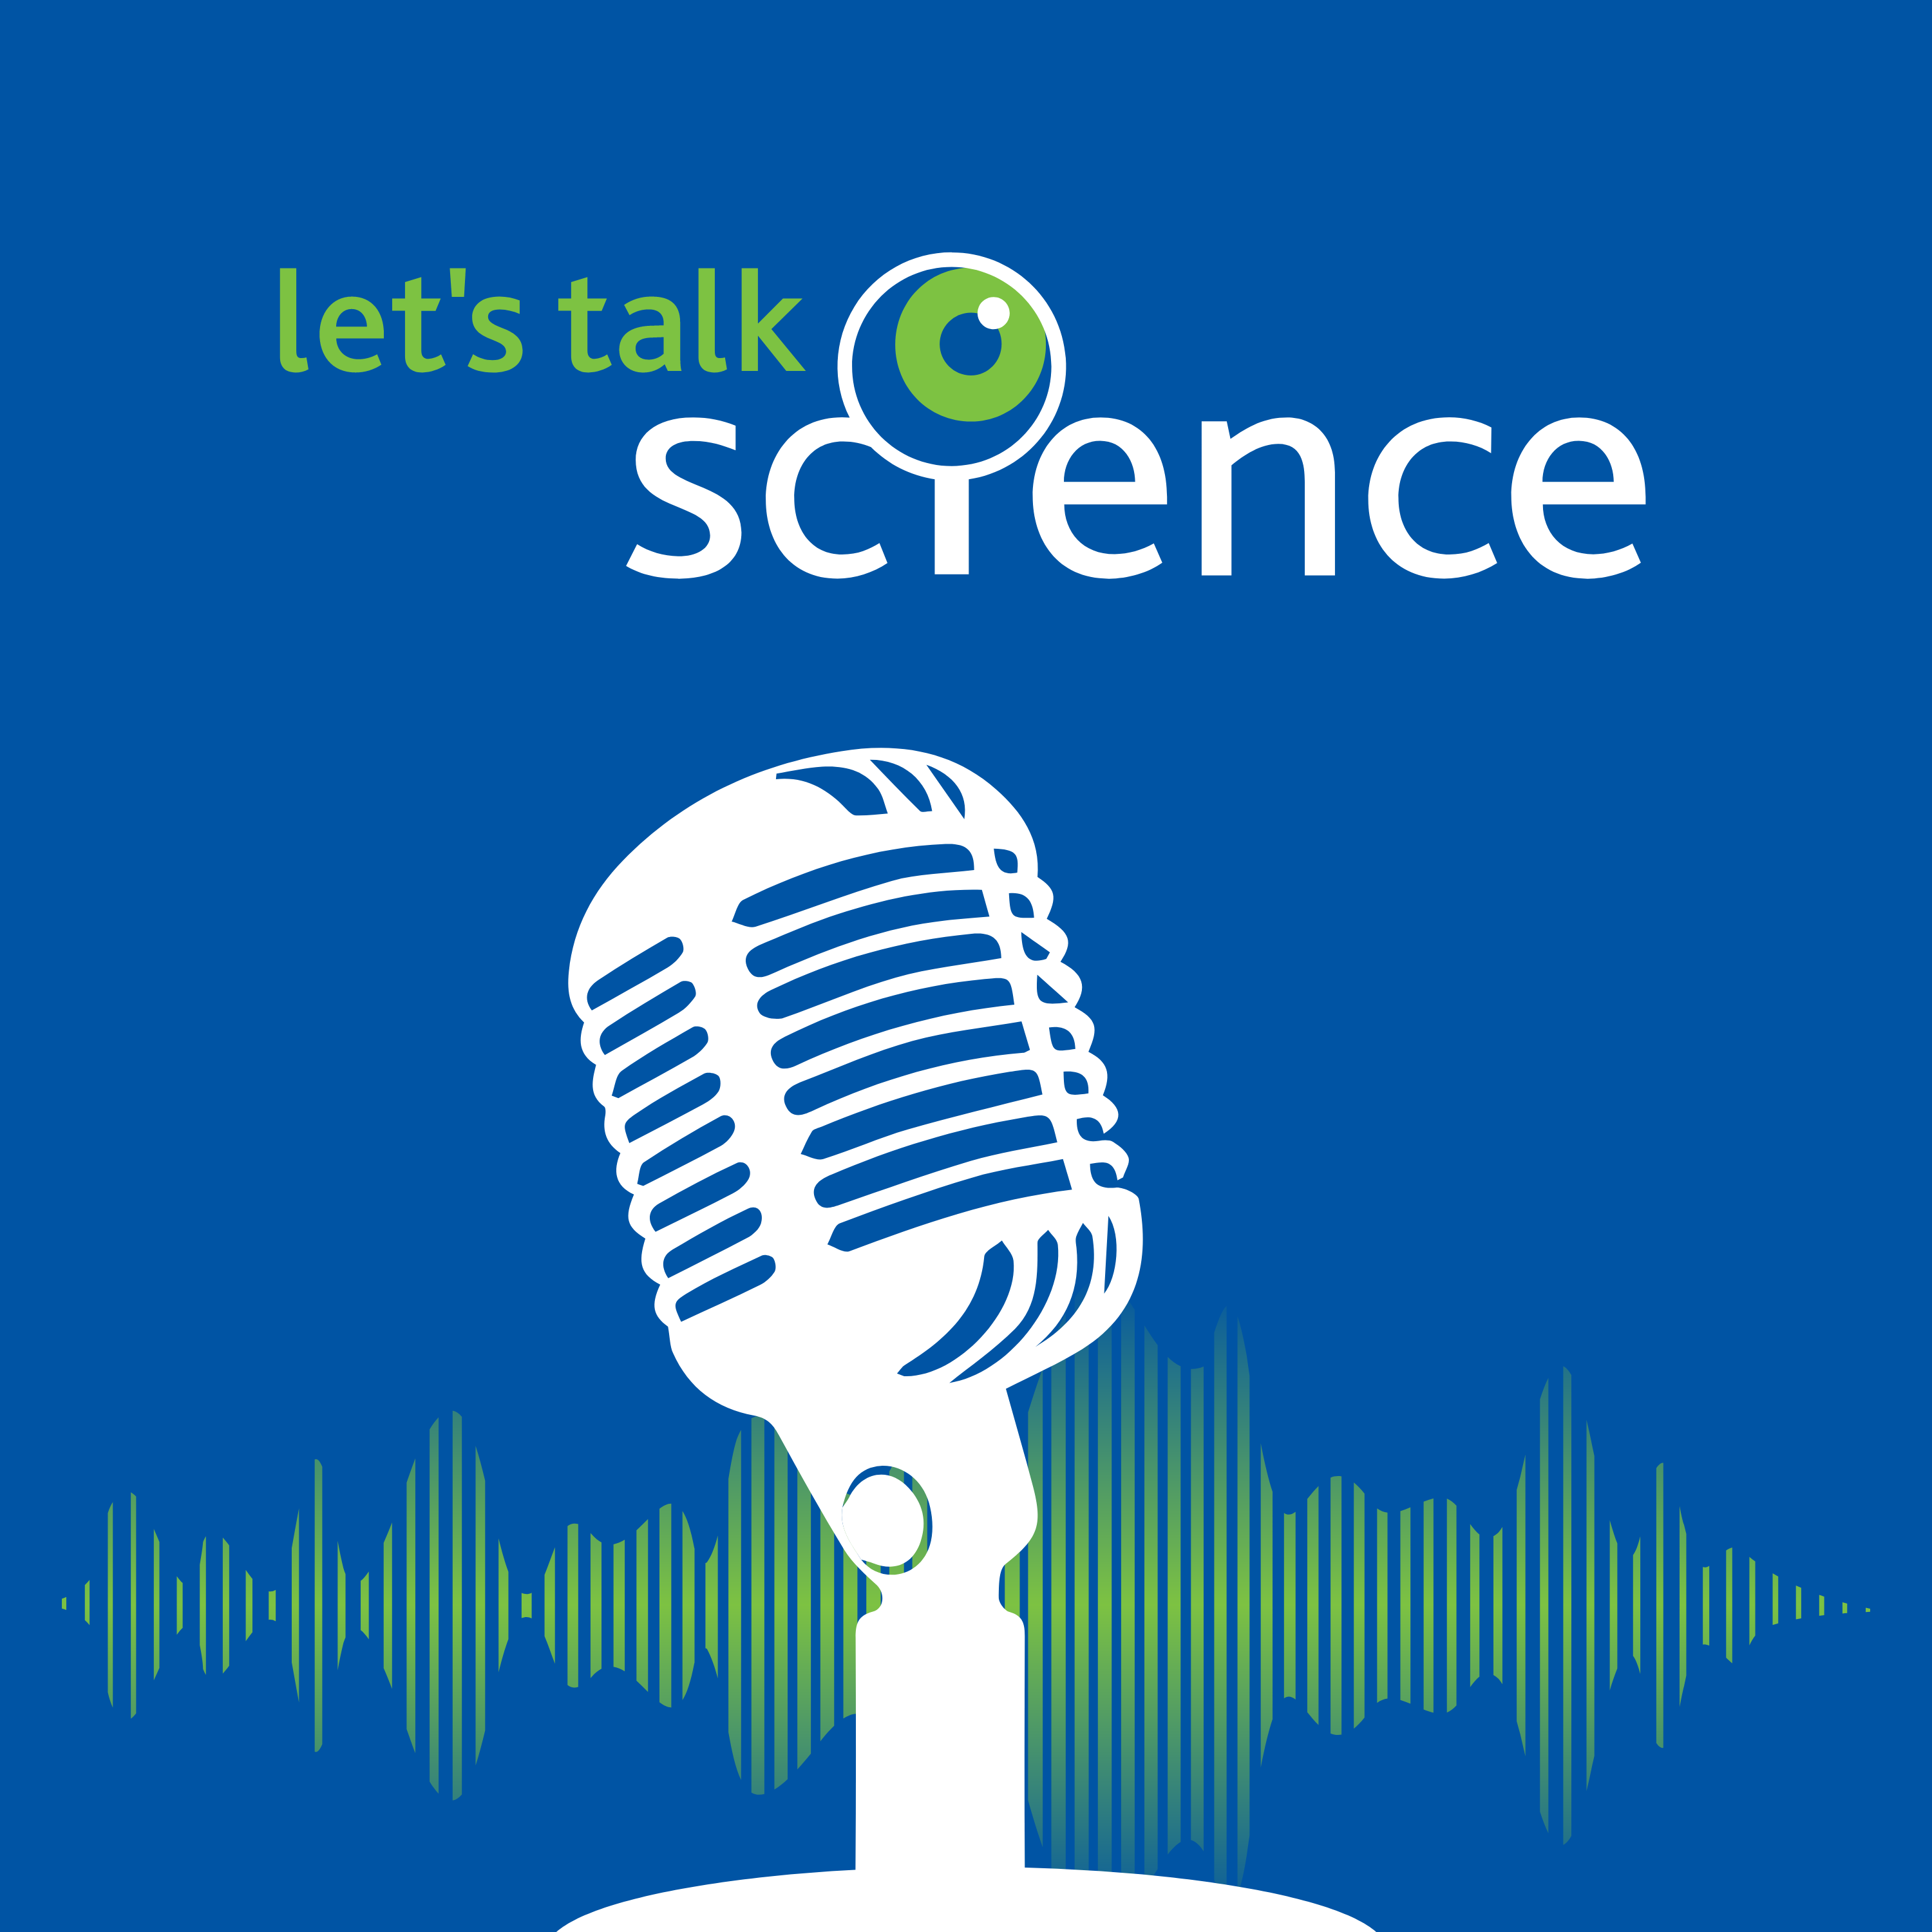 Let's Talk Science, microphone illustration with waveform 